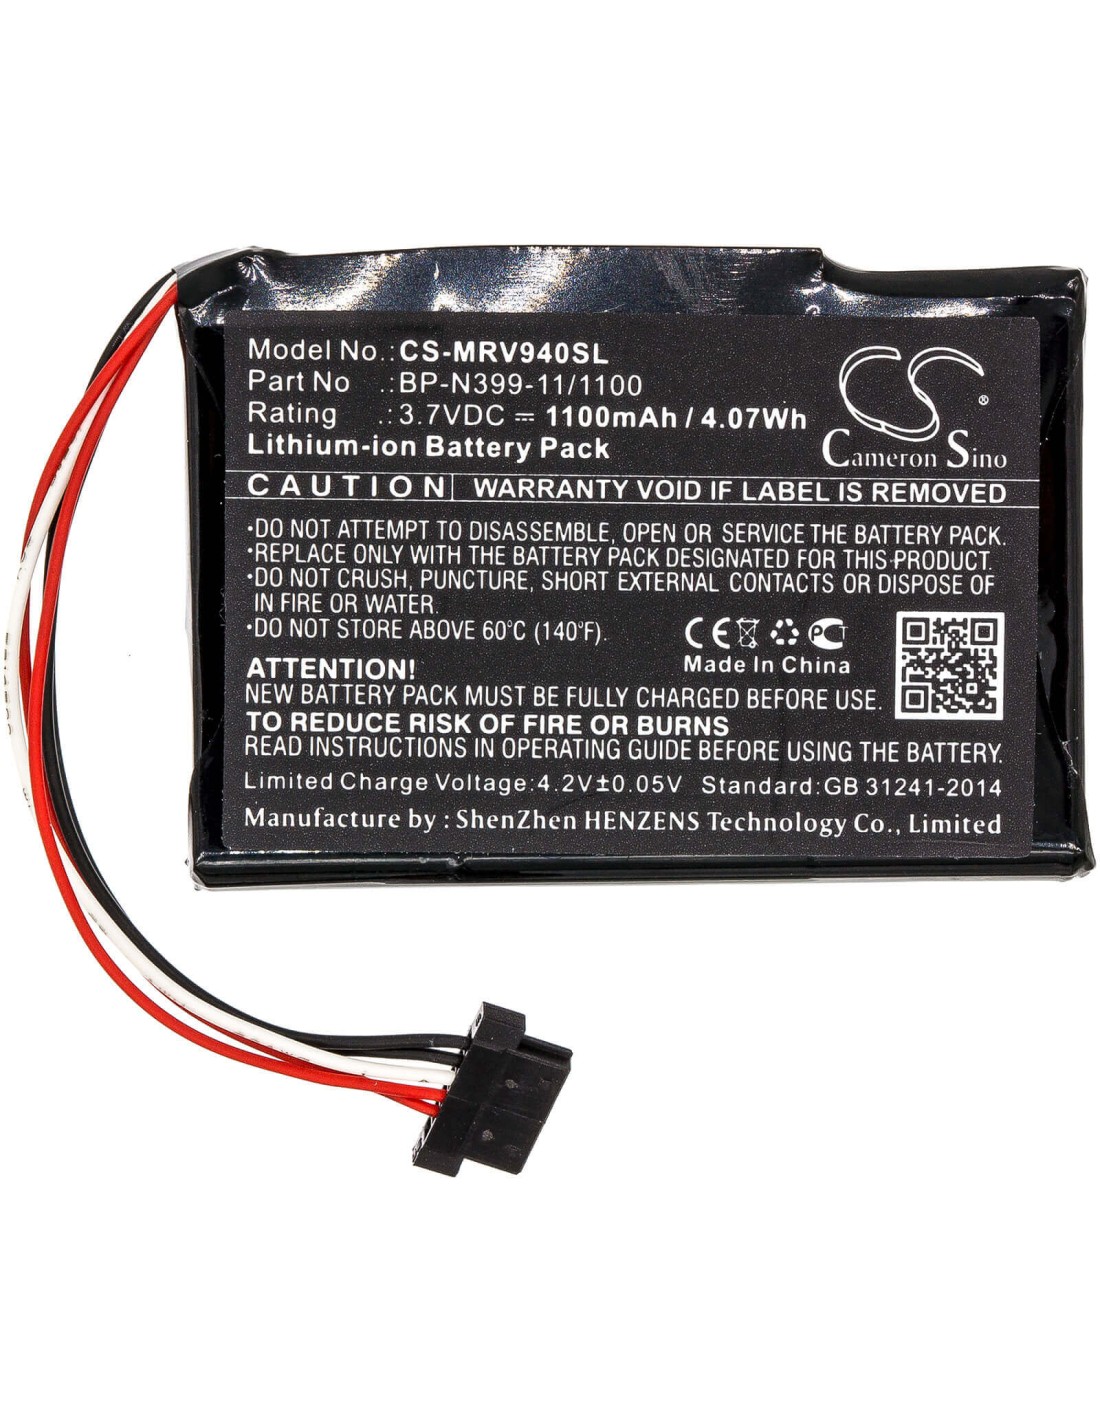 Battery for Magellan, Roadmate Rv 9490t-lmb 3.7V, 1100mAh - 4.07Wh